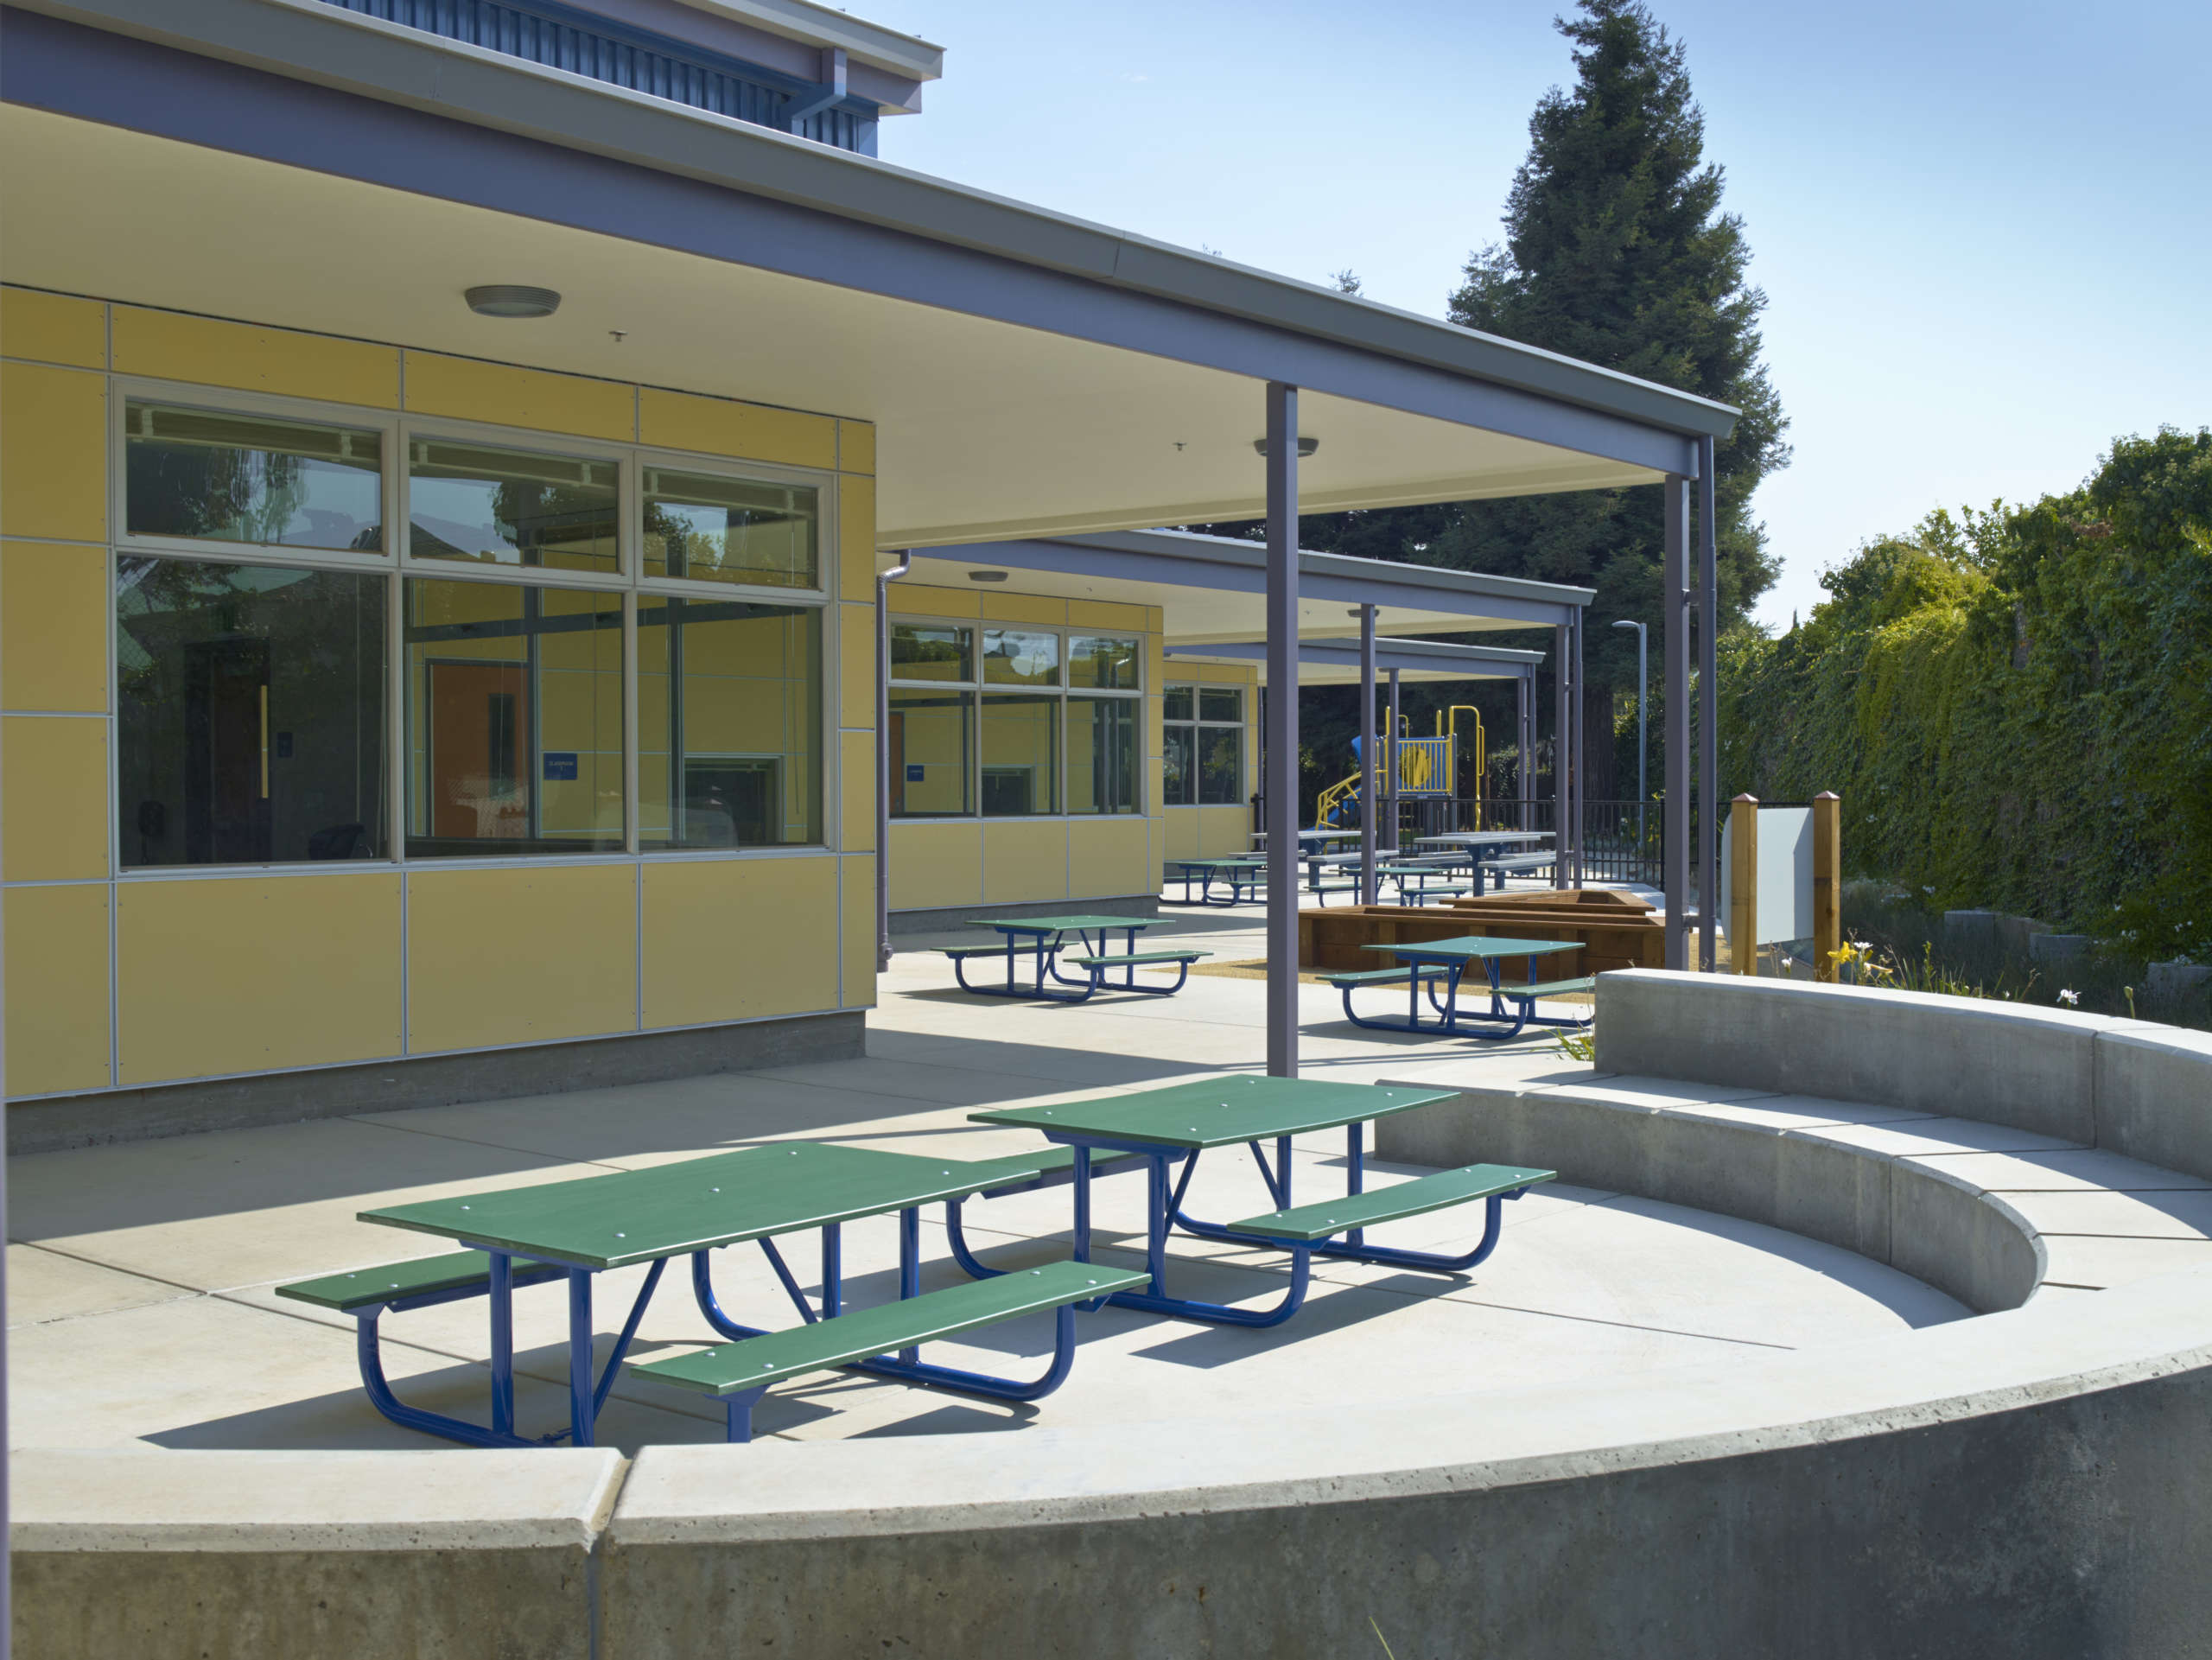 Outdoor picnic table area at Stonehurst Elementary School